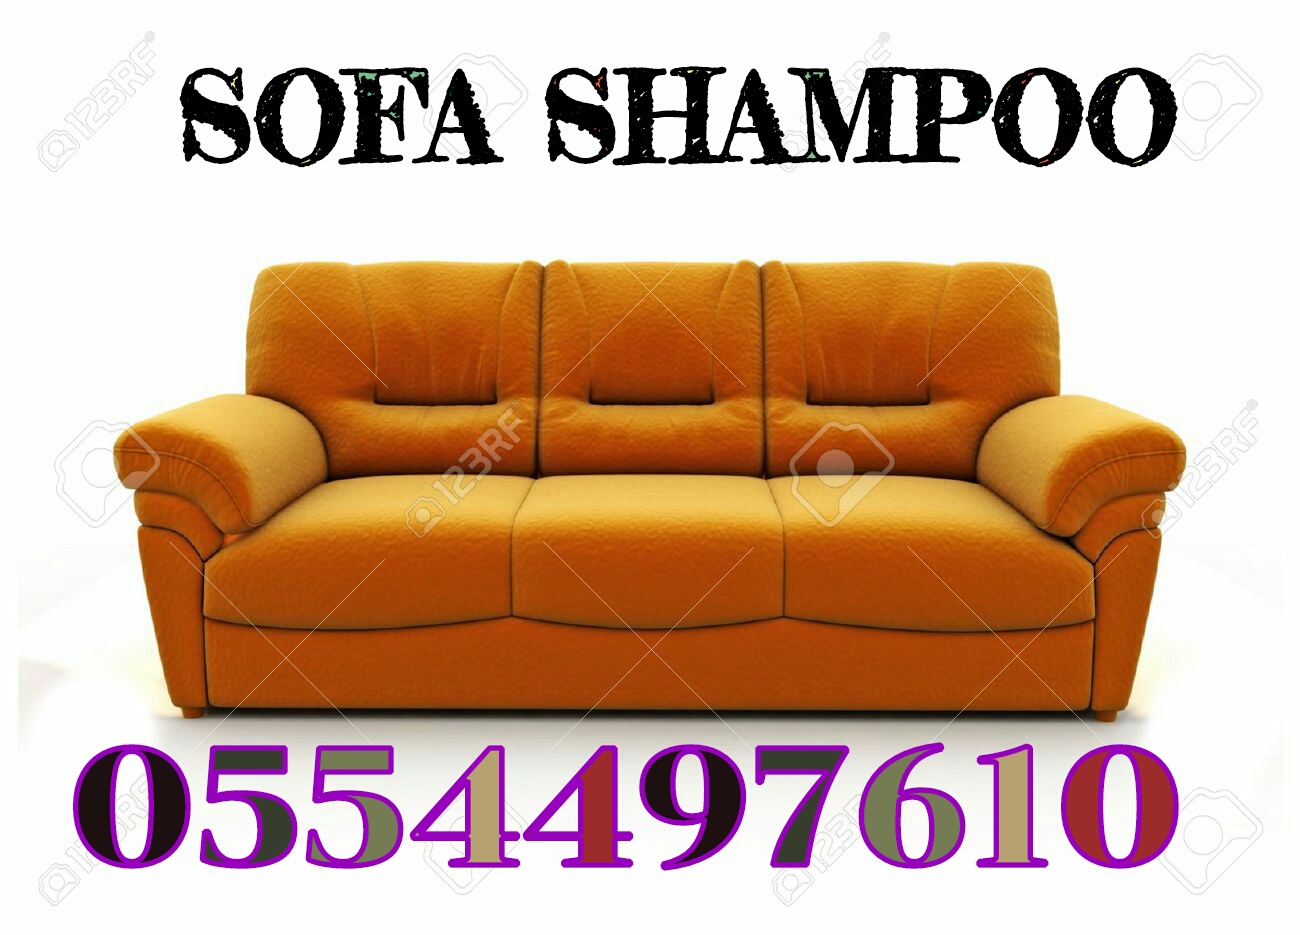 Sofa Cleaning Services Carpet Cleaning Mattress Shampoo Dubai